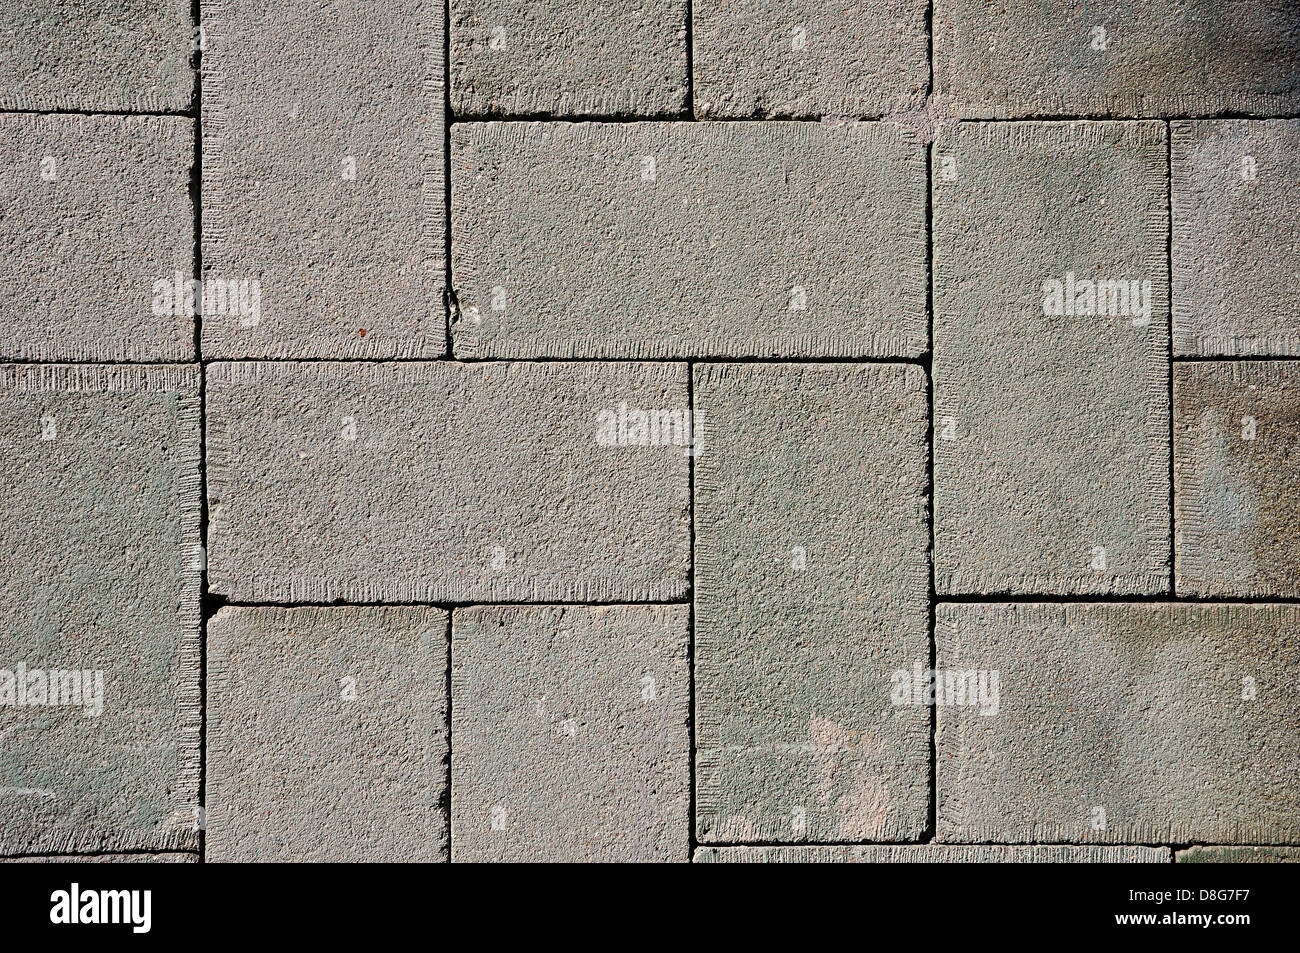 Ruta de baldosas de cemento Fotografía de stock - Alamy